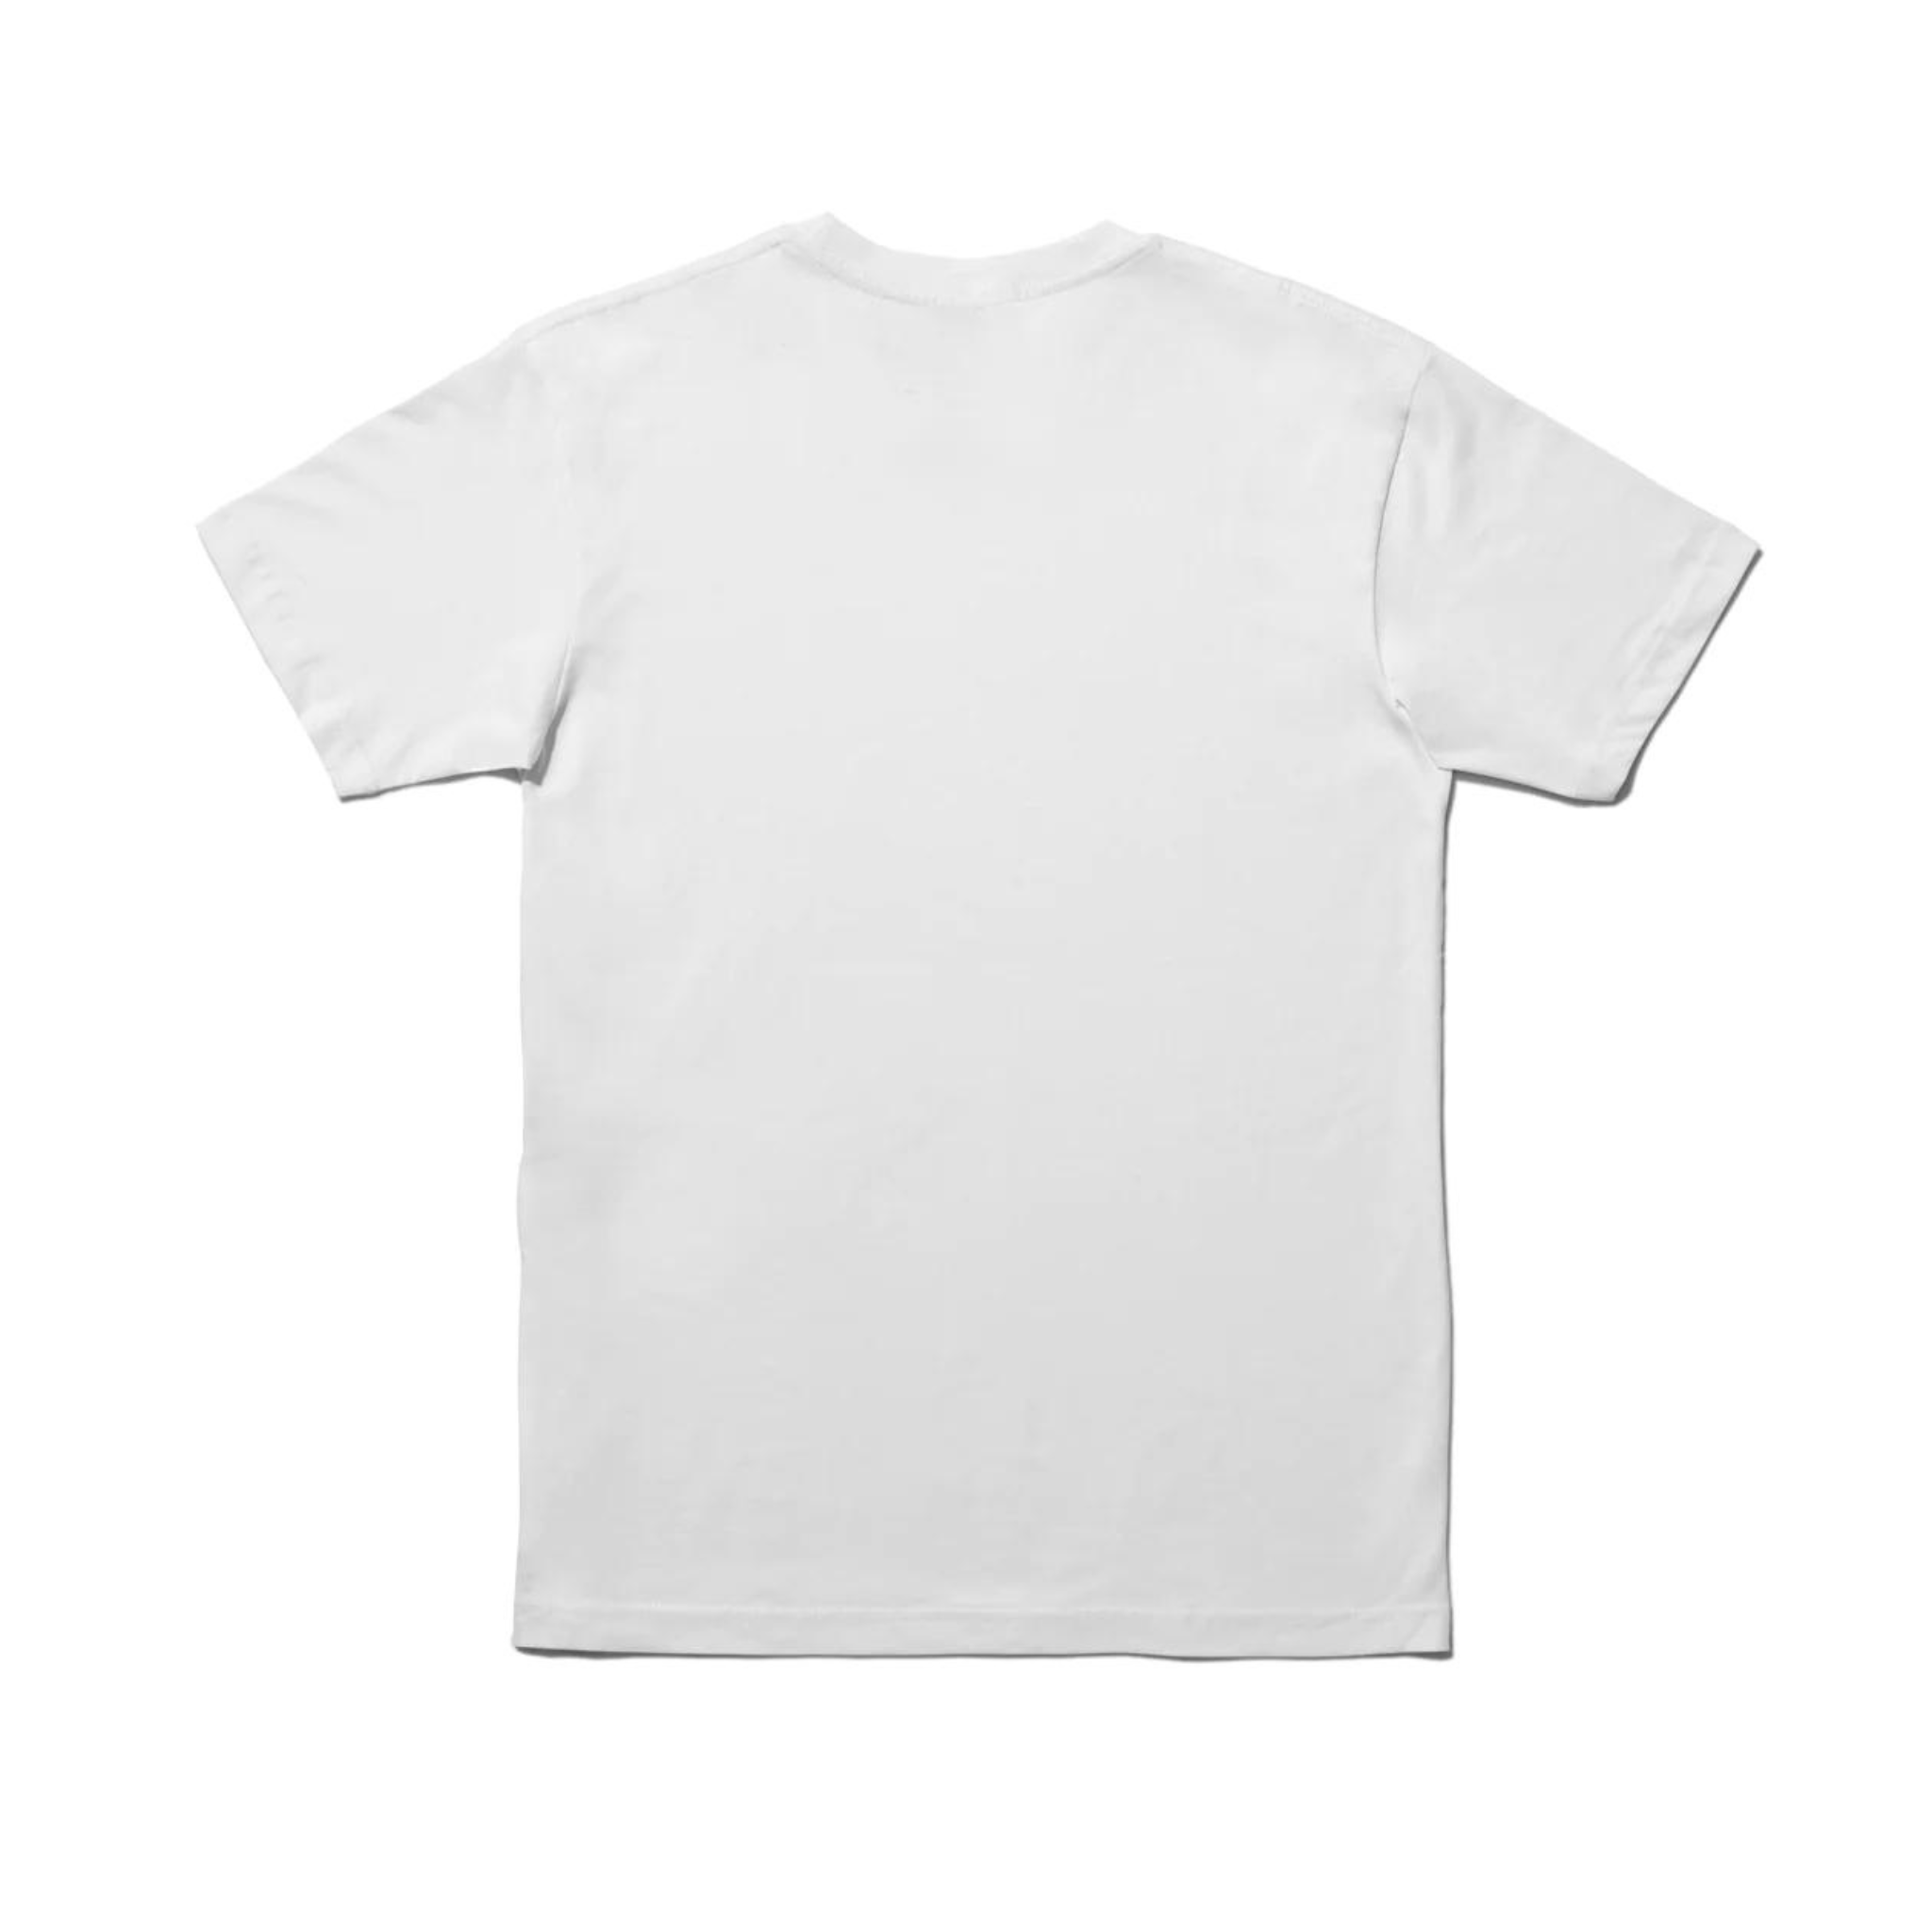 Beastie Boys x Stance Great Outdoors T-Shirt